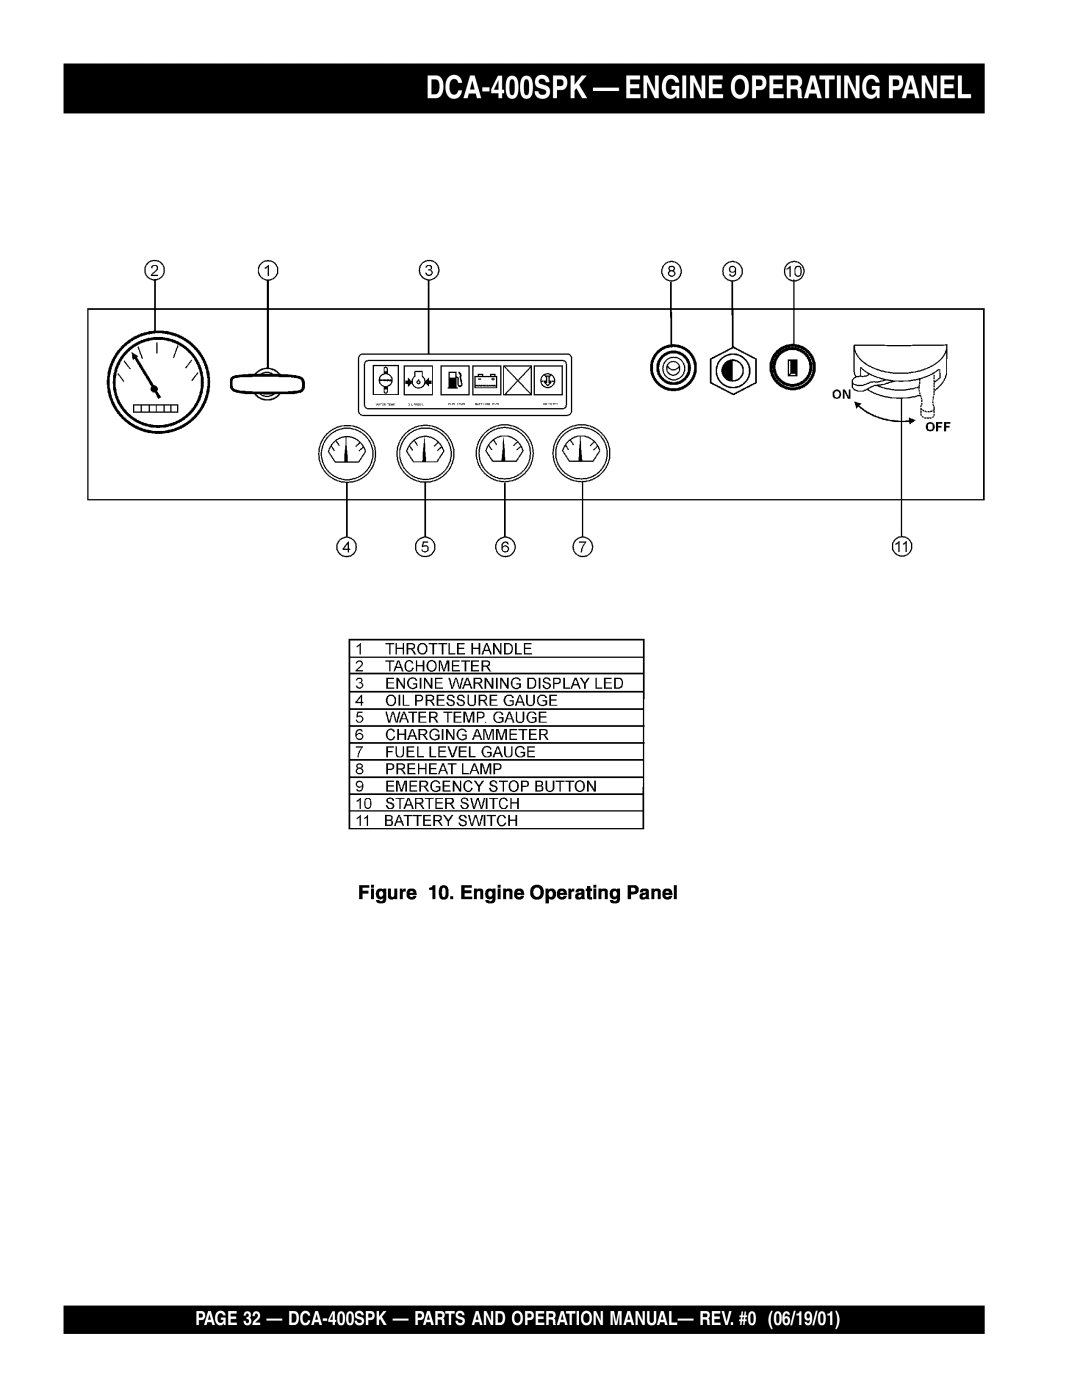 Multiquip operation manual DCA-400SPK— ENGINE OPERATING PANEL, Engine Operating Panel 